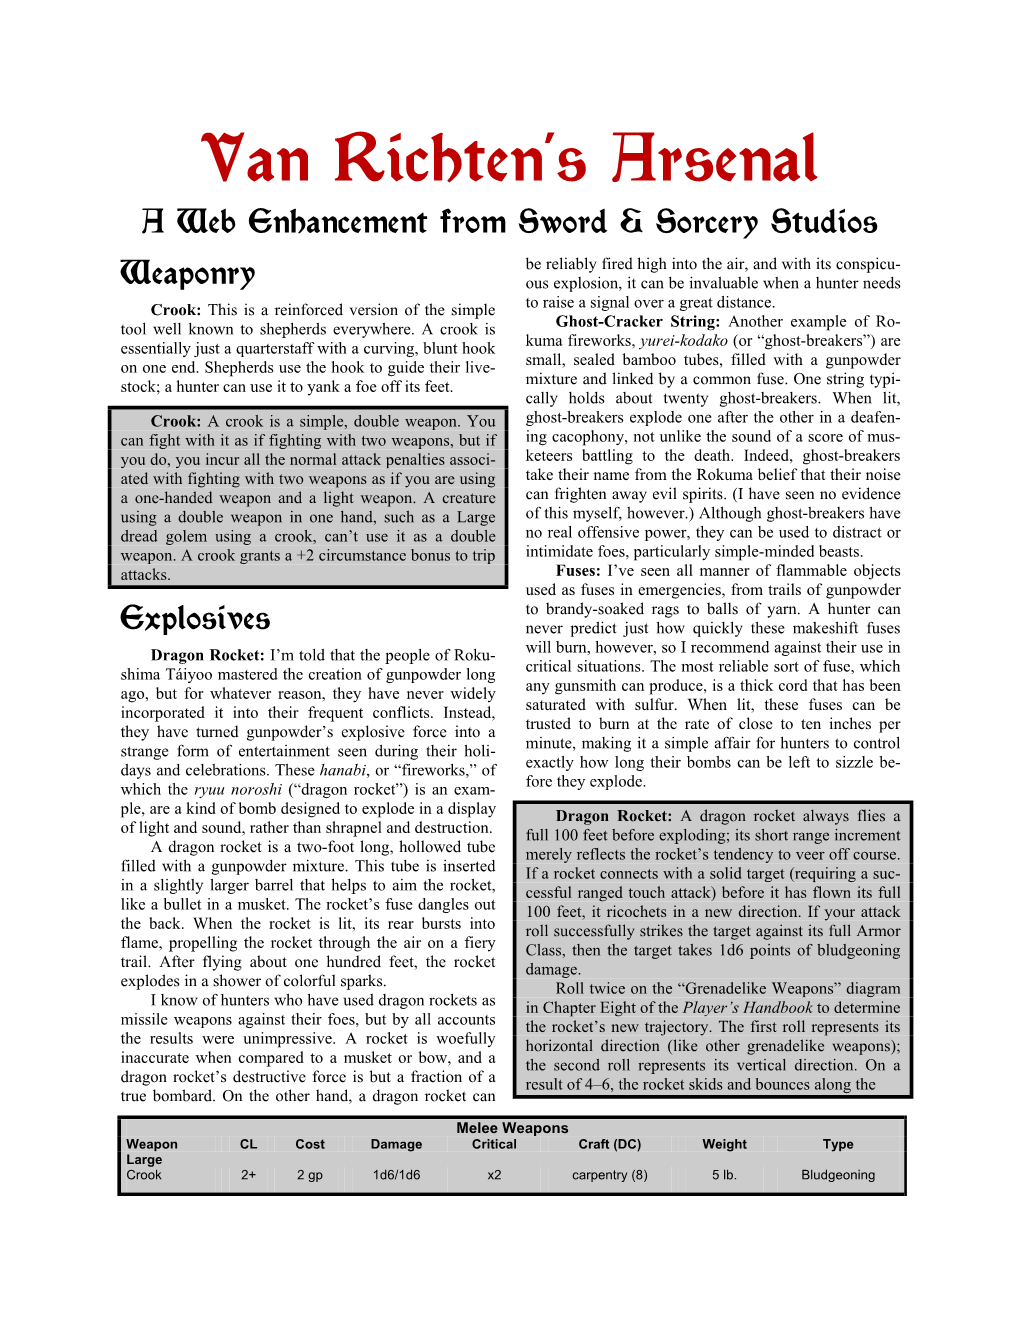 Van Richten's Arsenal Web Enhancement